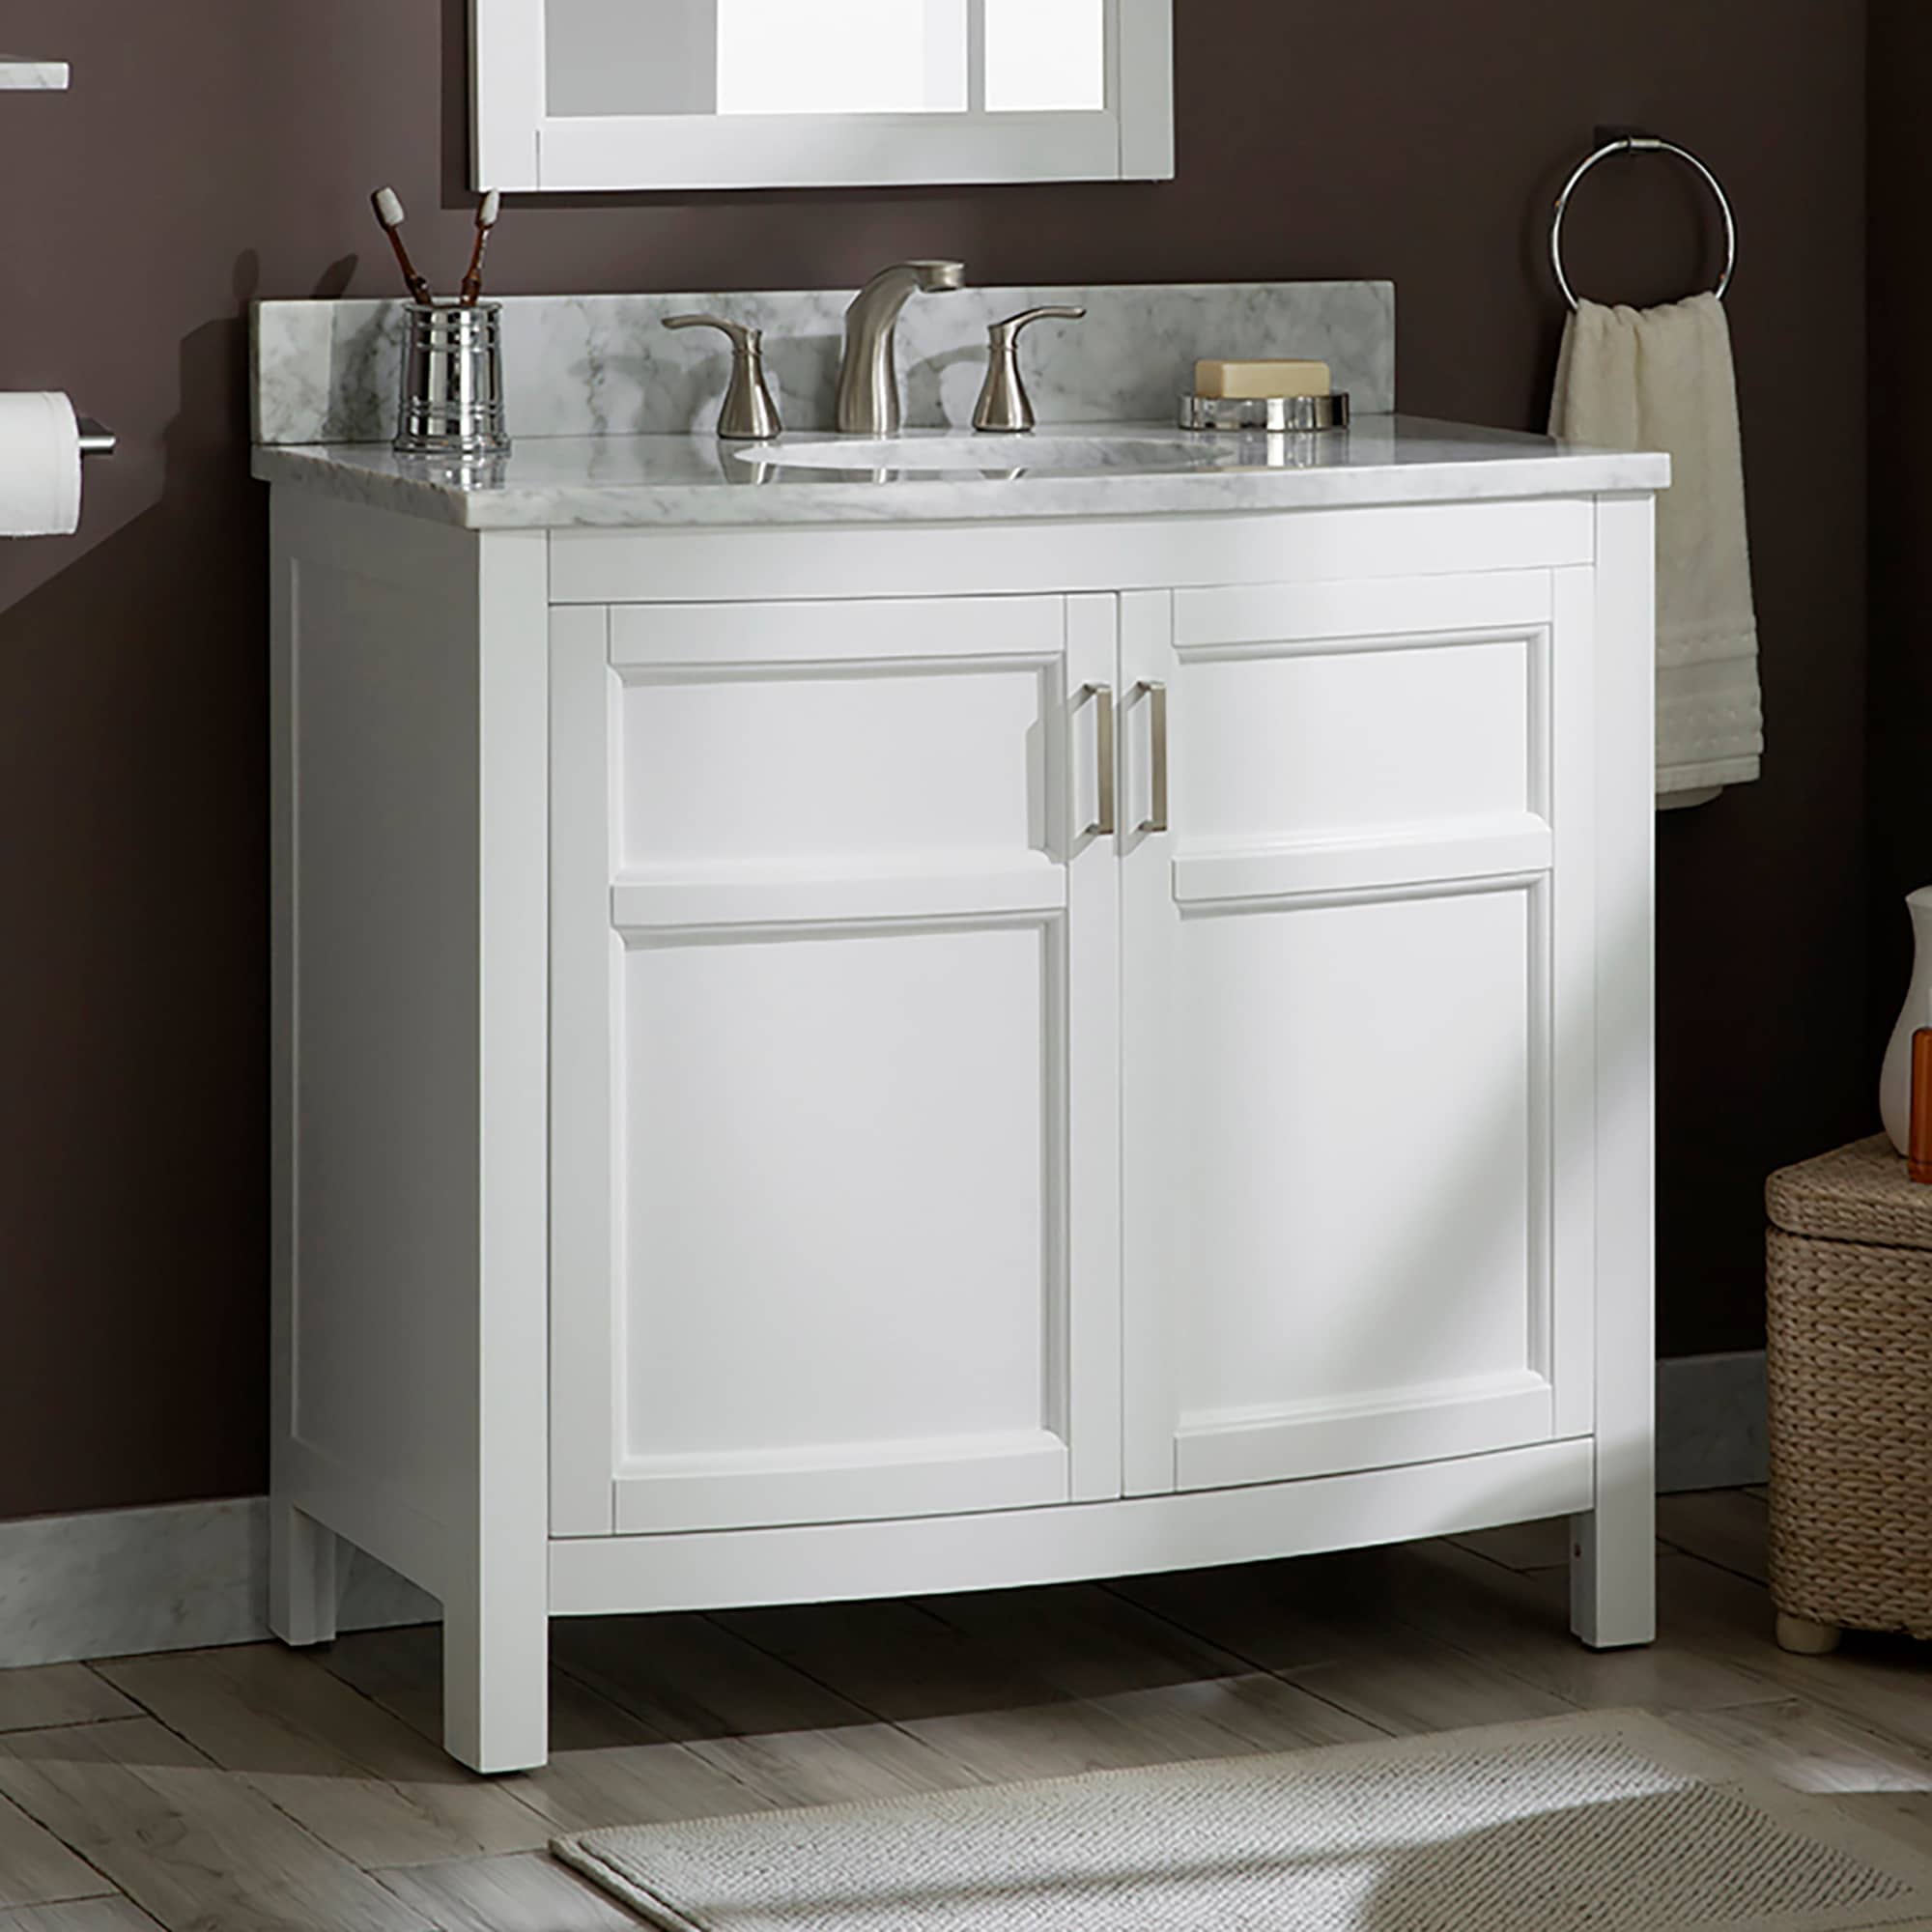 allen + roth Moravia 36-in White Undermount Single Sink Bathroom Vanity ...